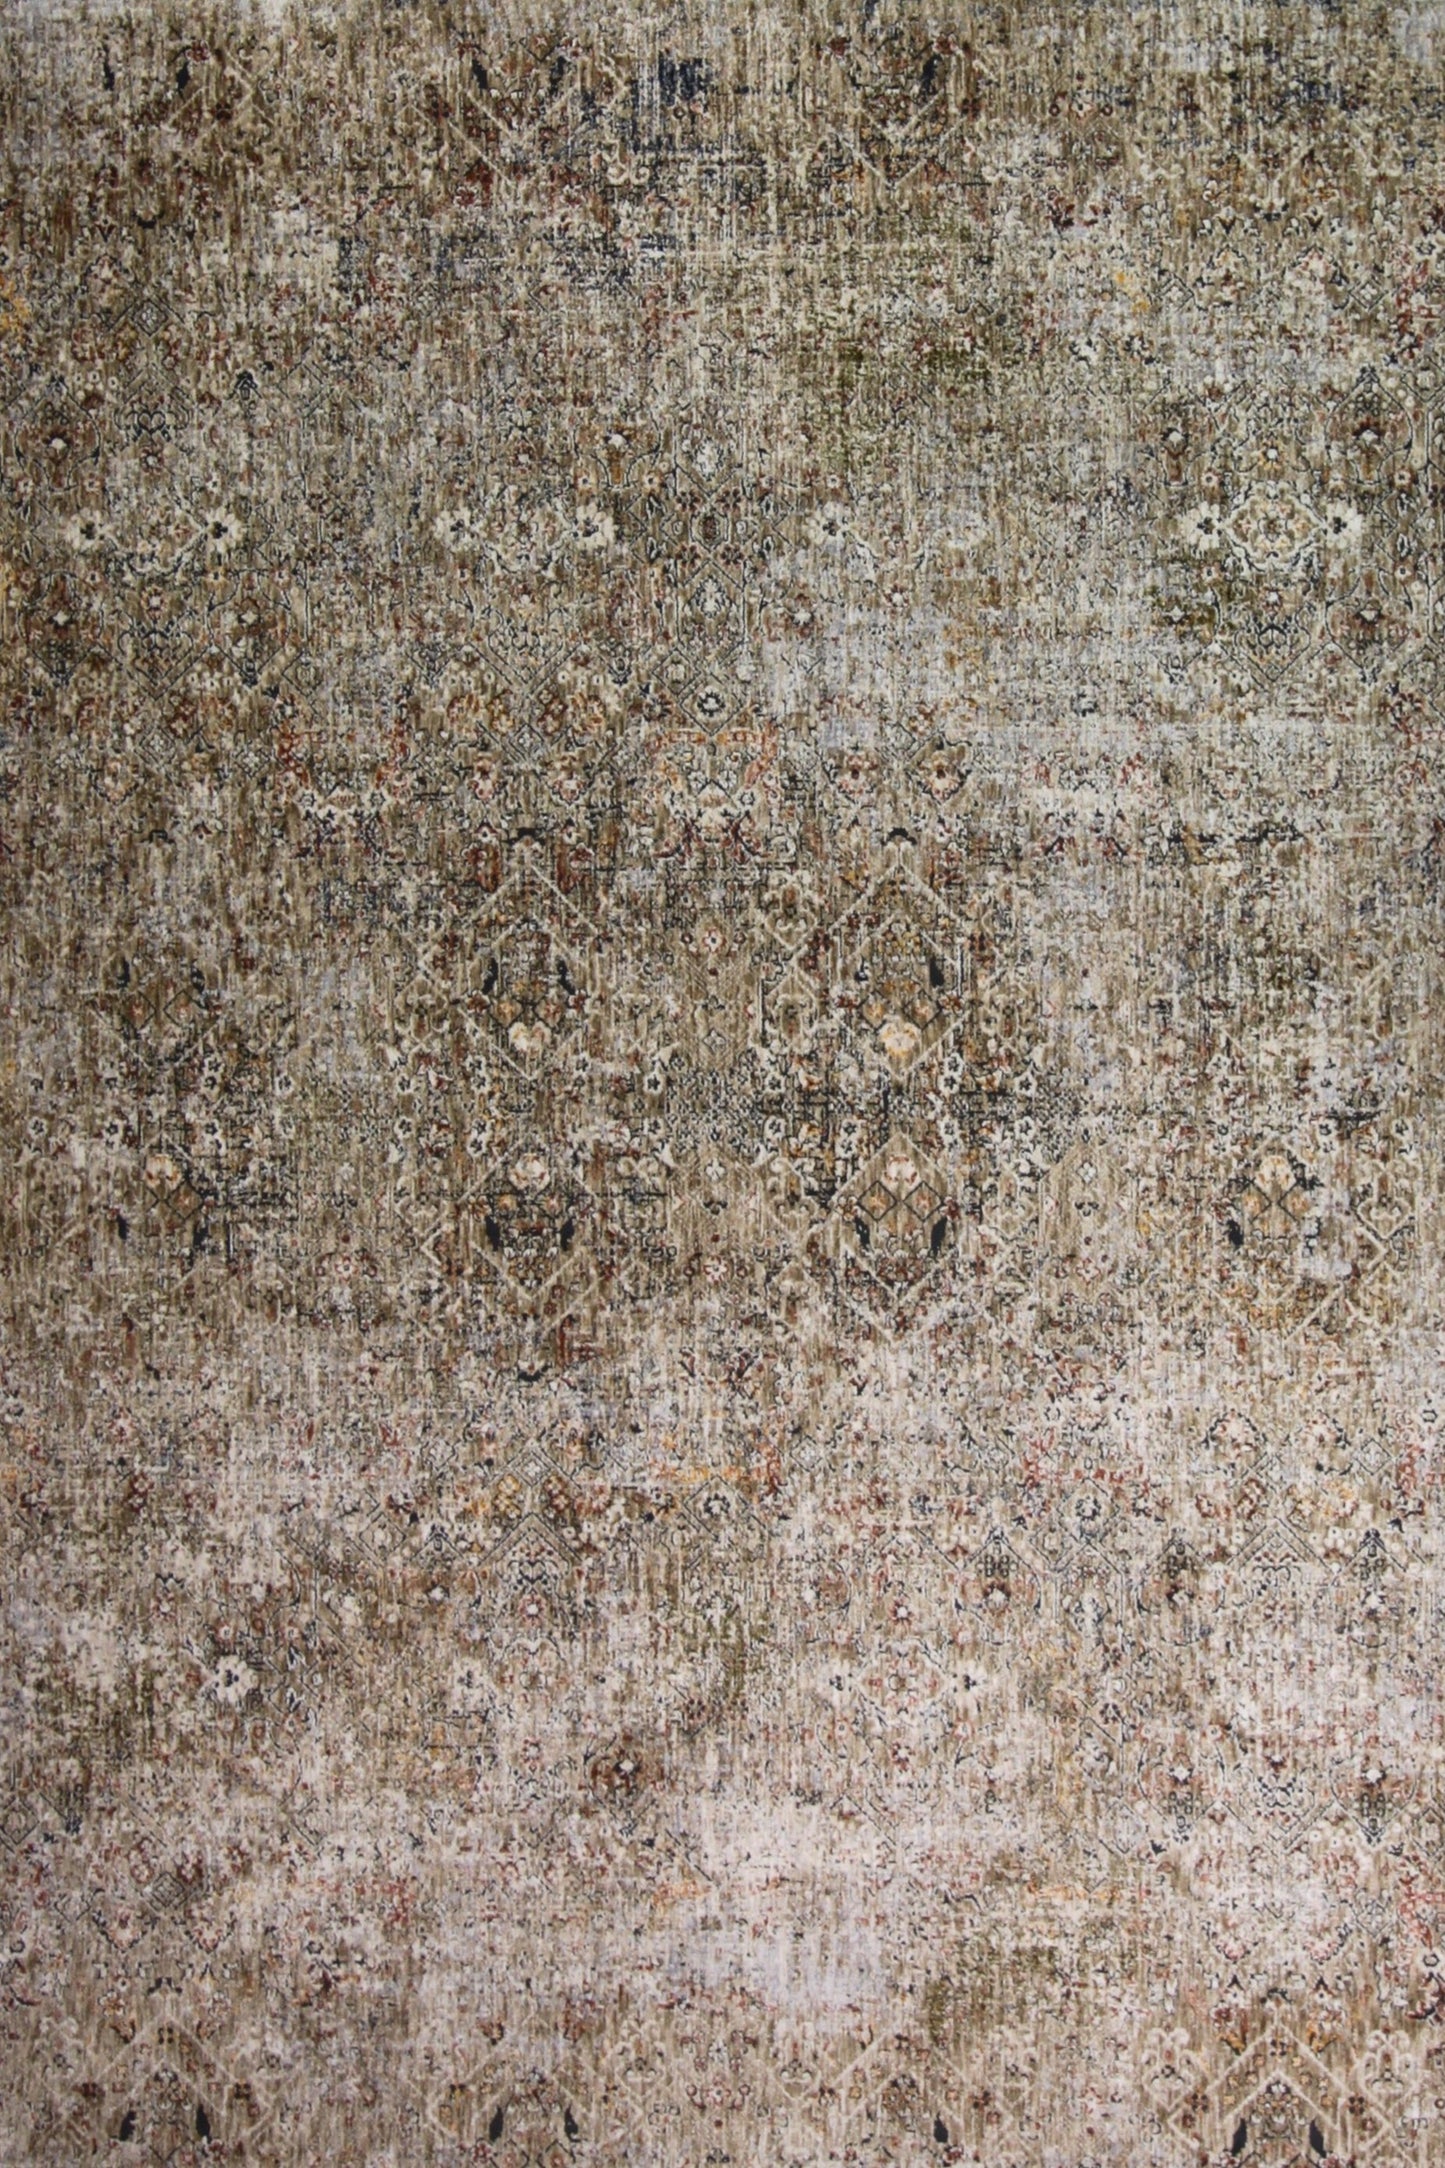 BA-201: Synthetic fiber rug